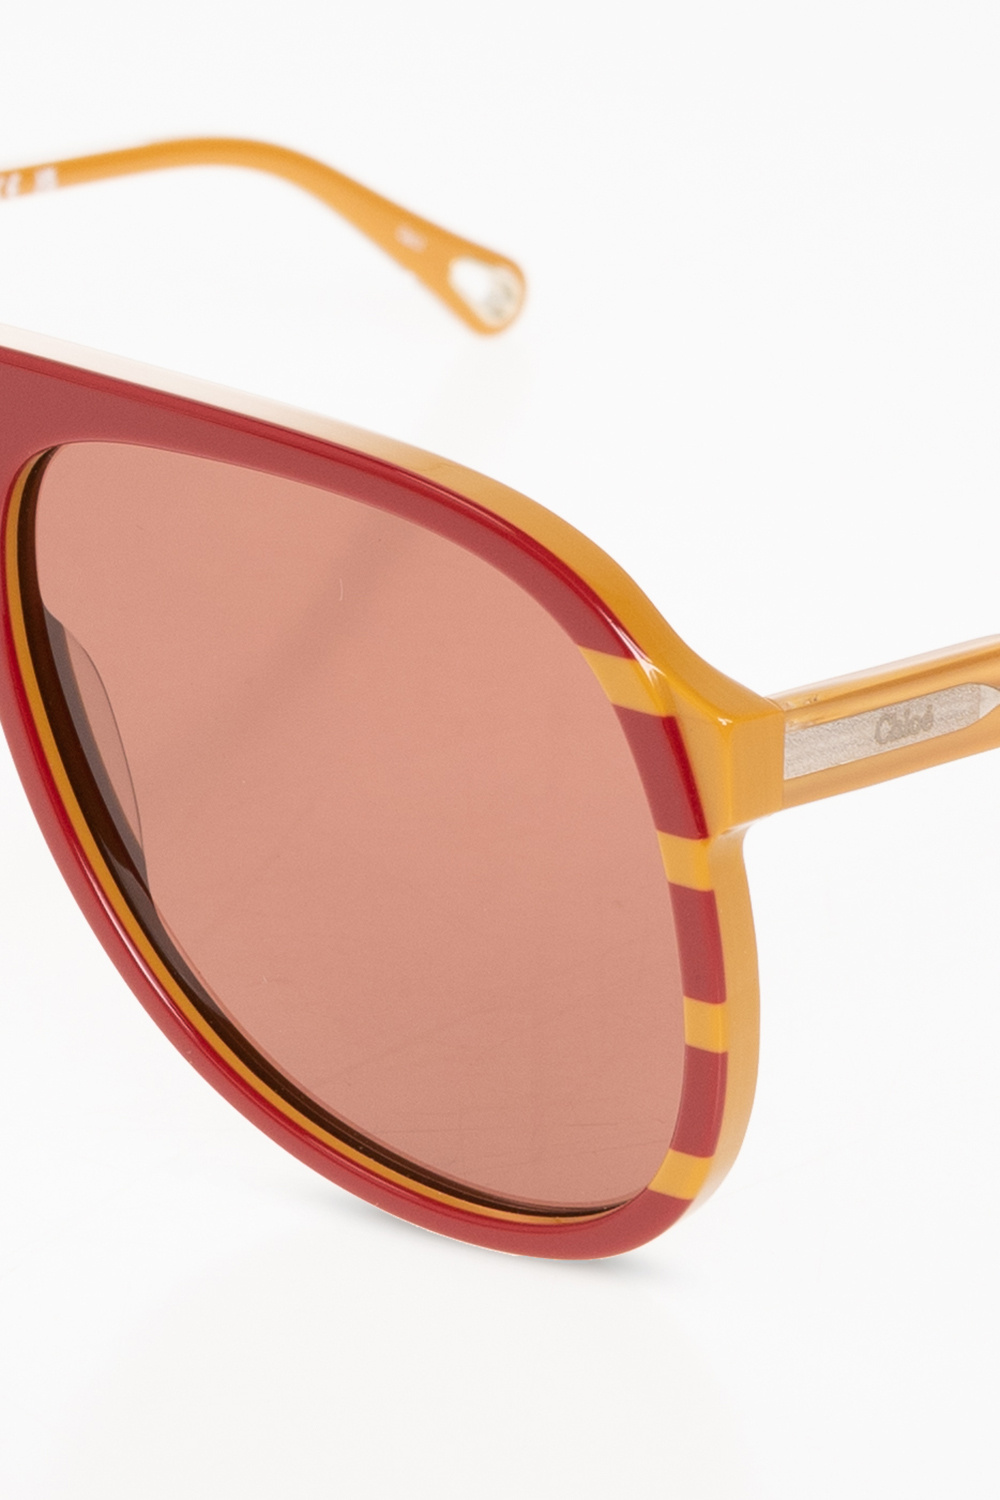 Chloé Aviator Vanguard sunglasses